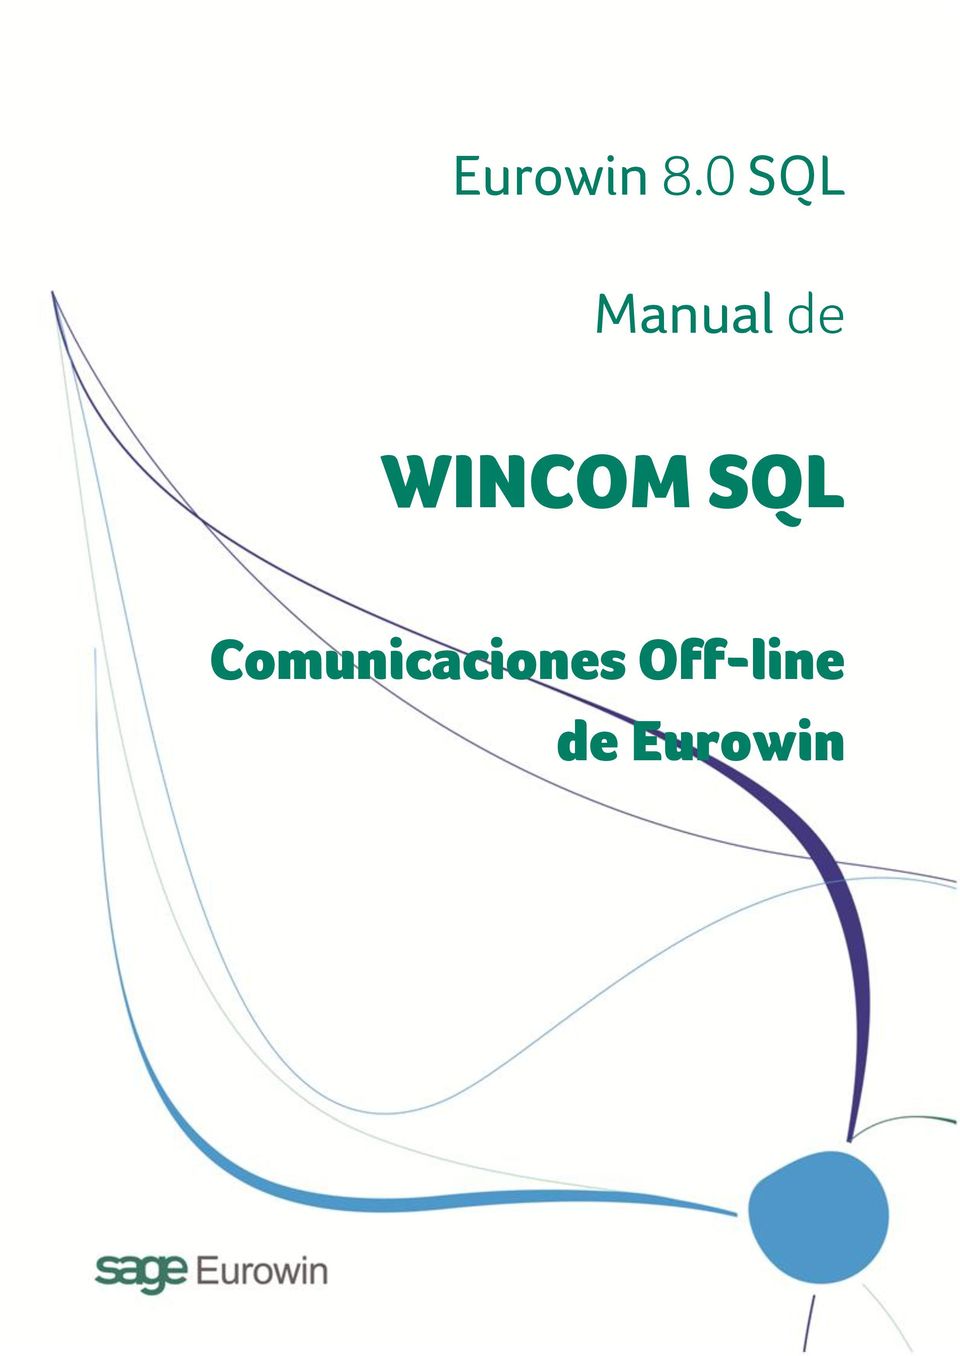 WINCOM SQL